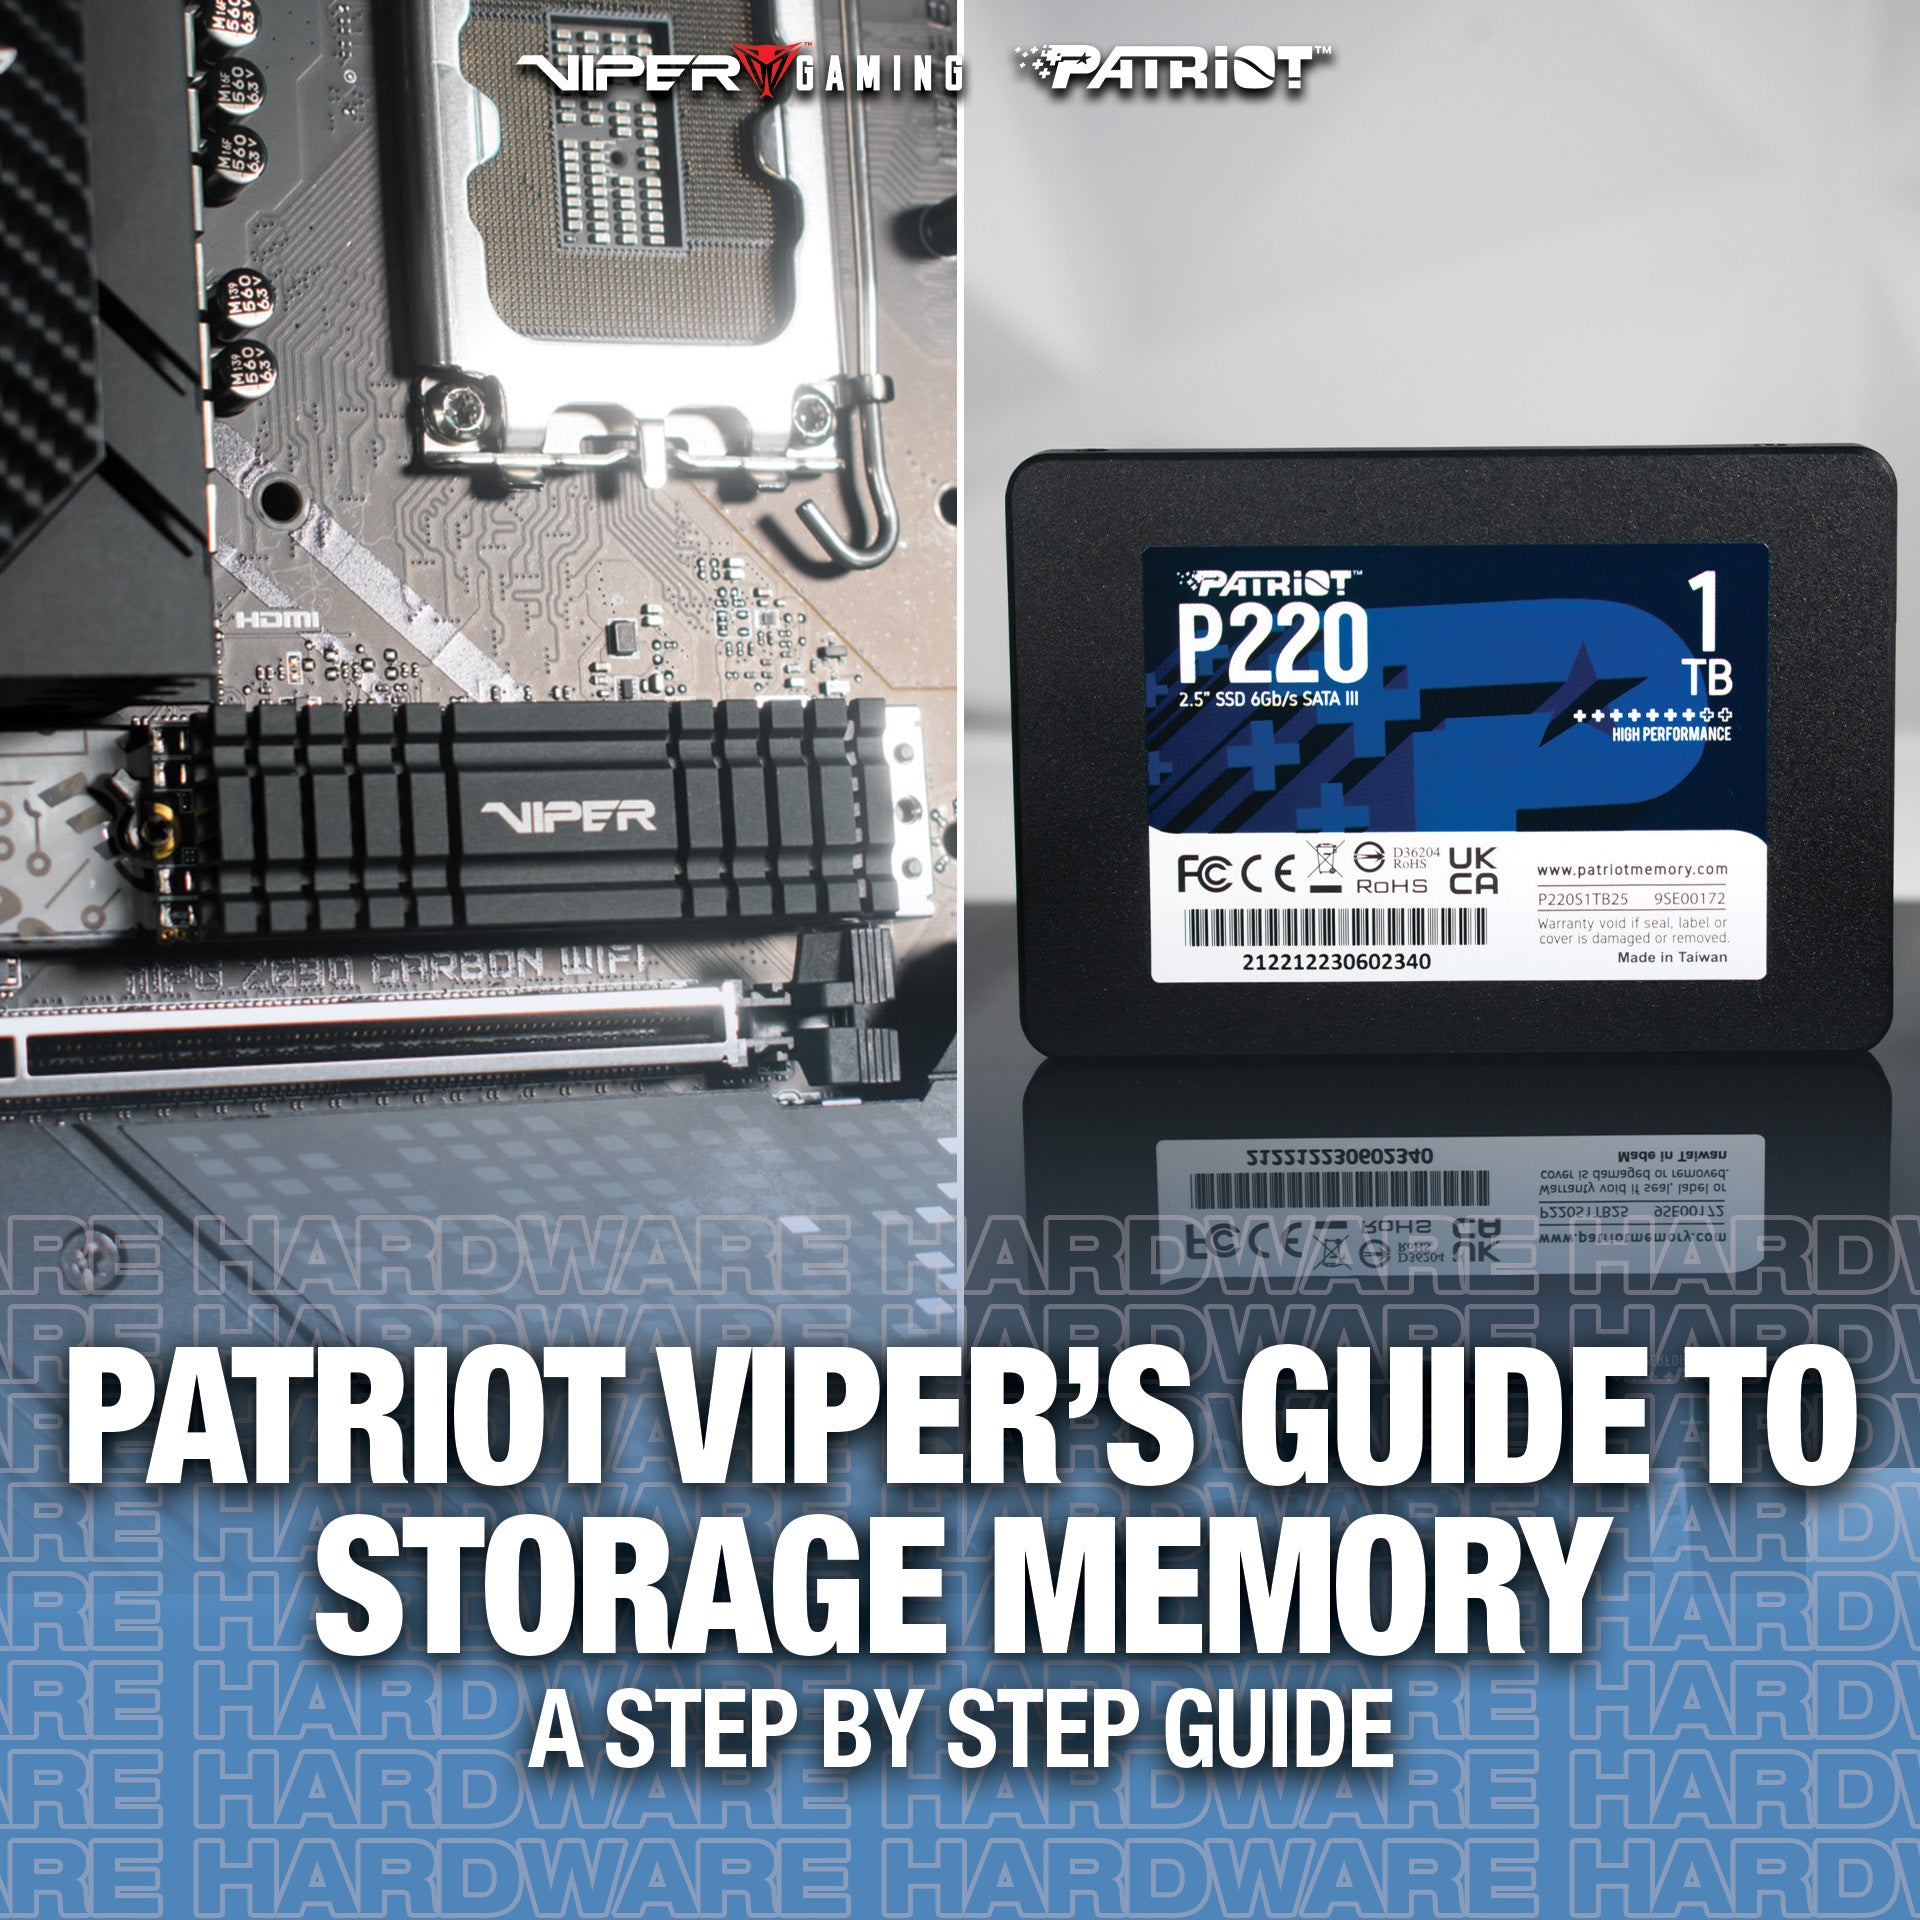 Patriot Viper's Guide to Storage Memory